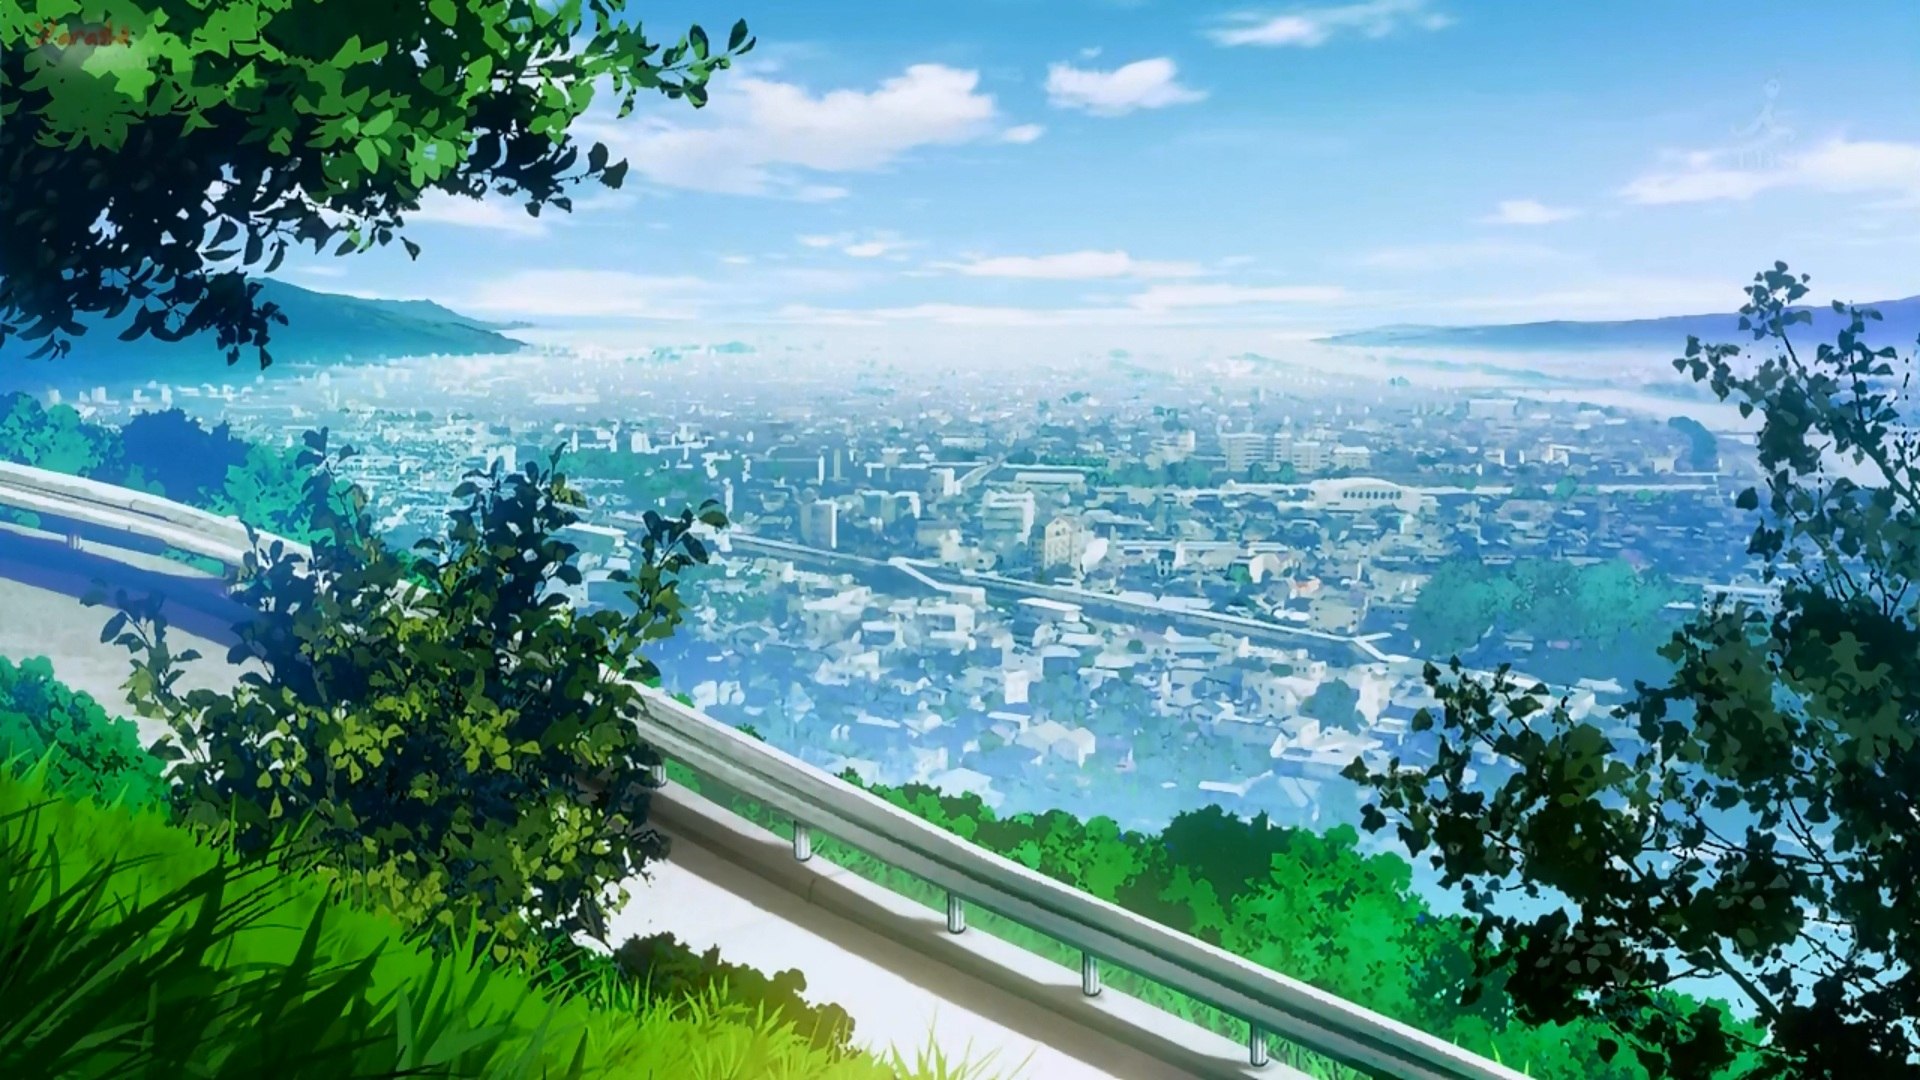 anime scenery wallpaper,natural landscape,nature,sky,vegetation,hill station